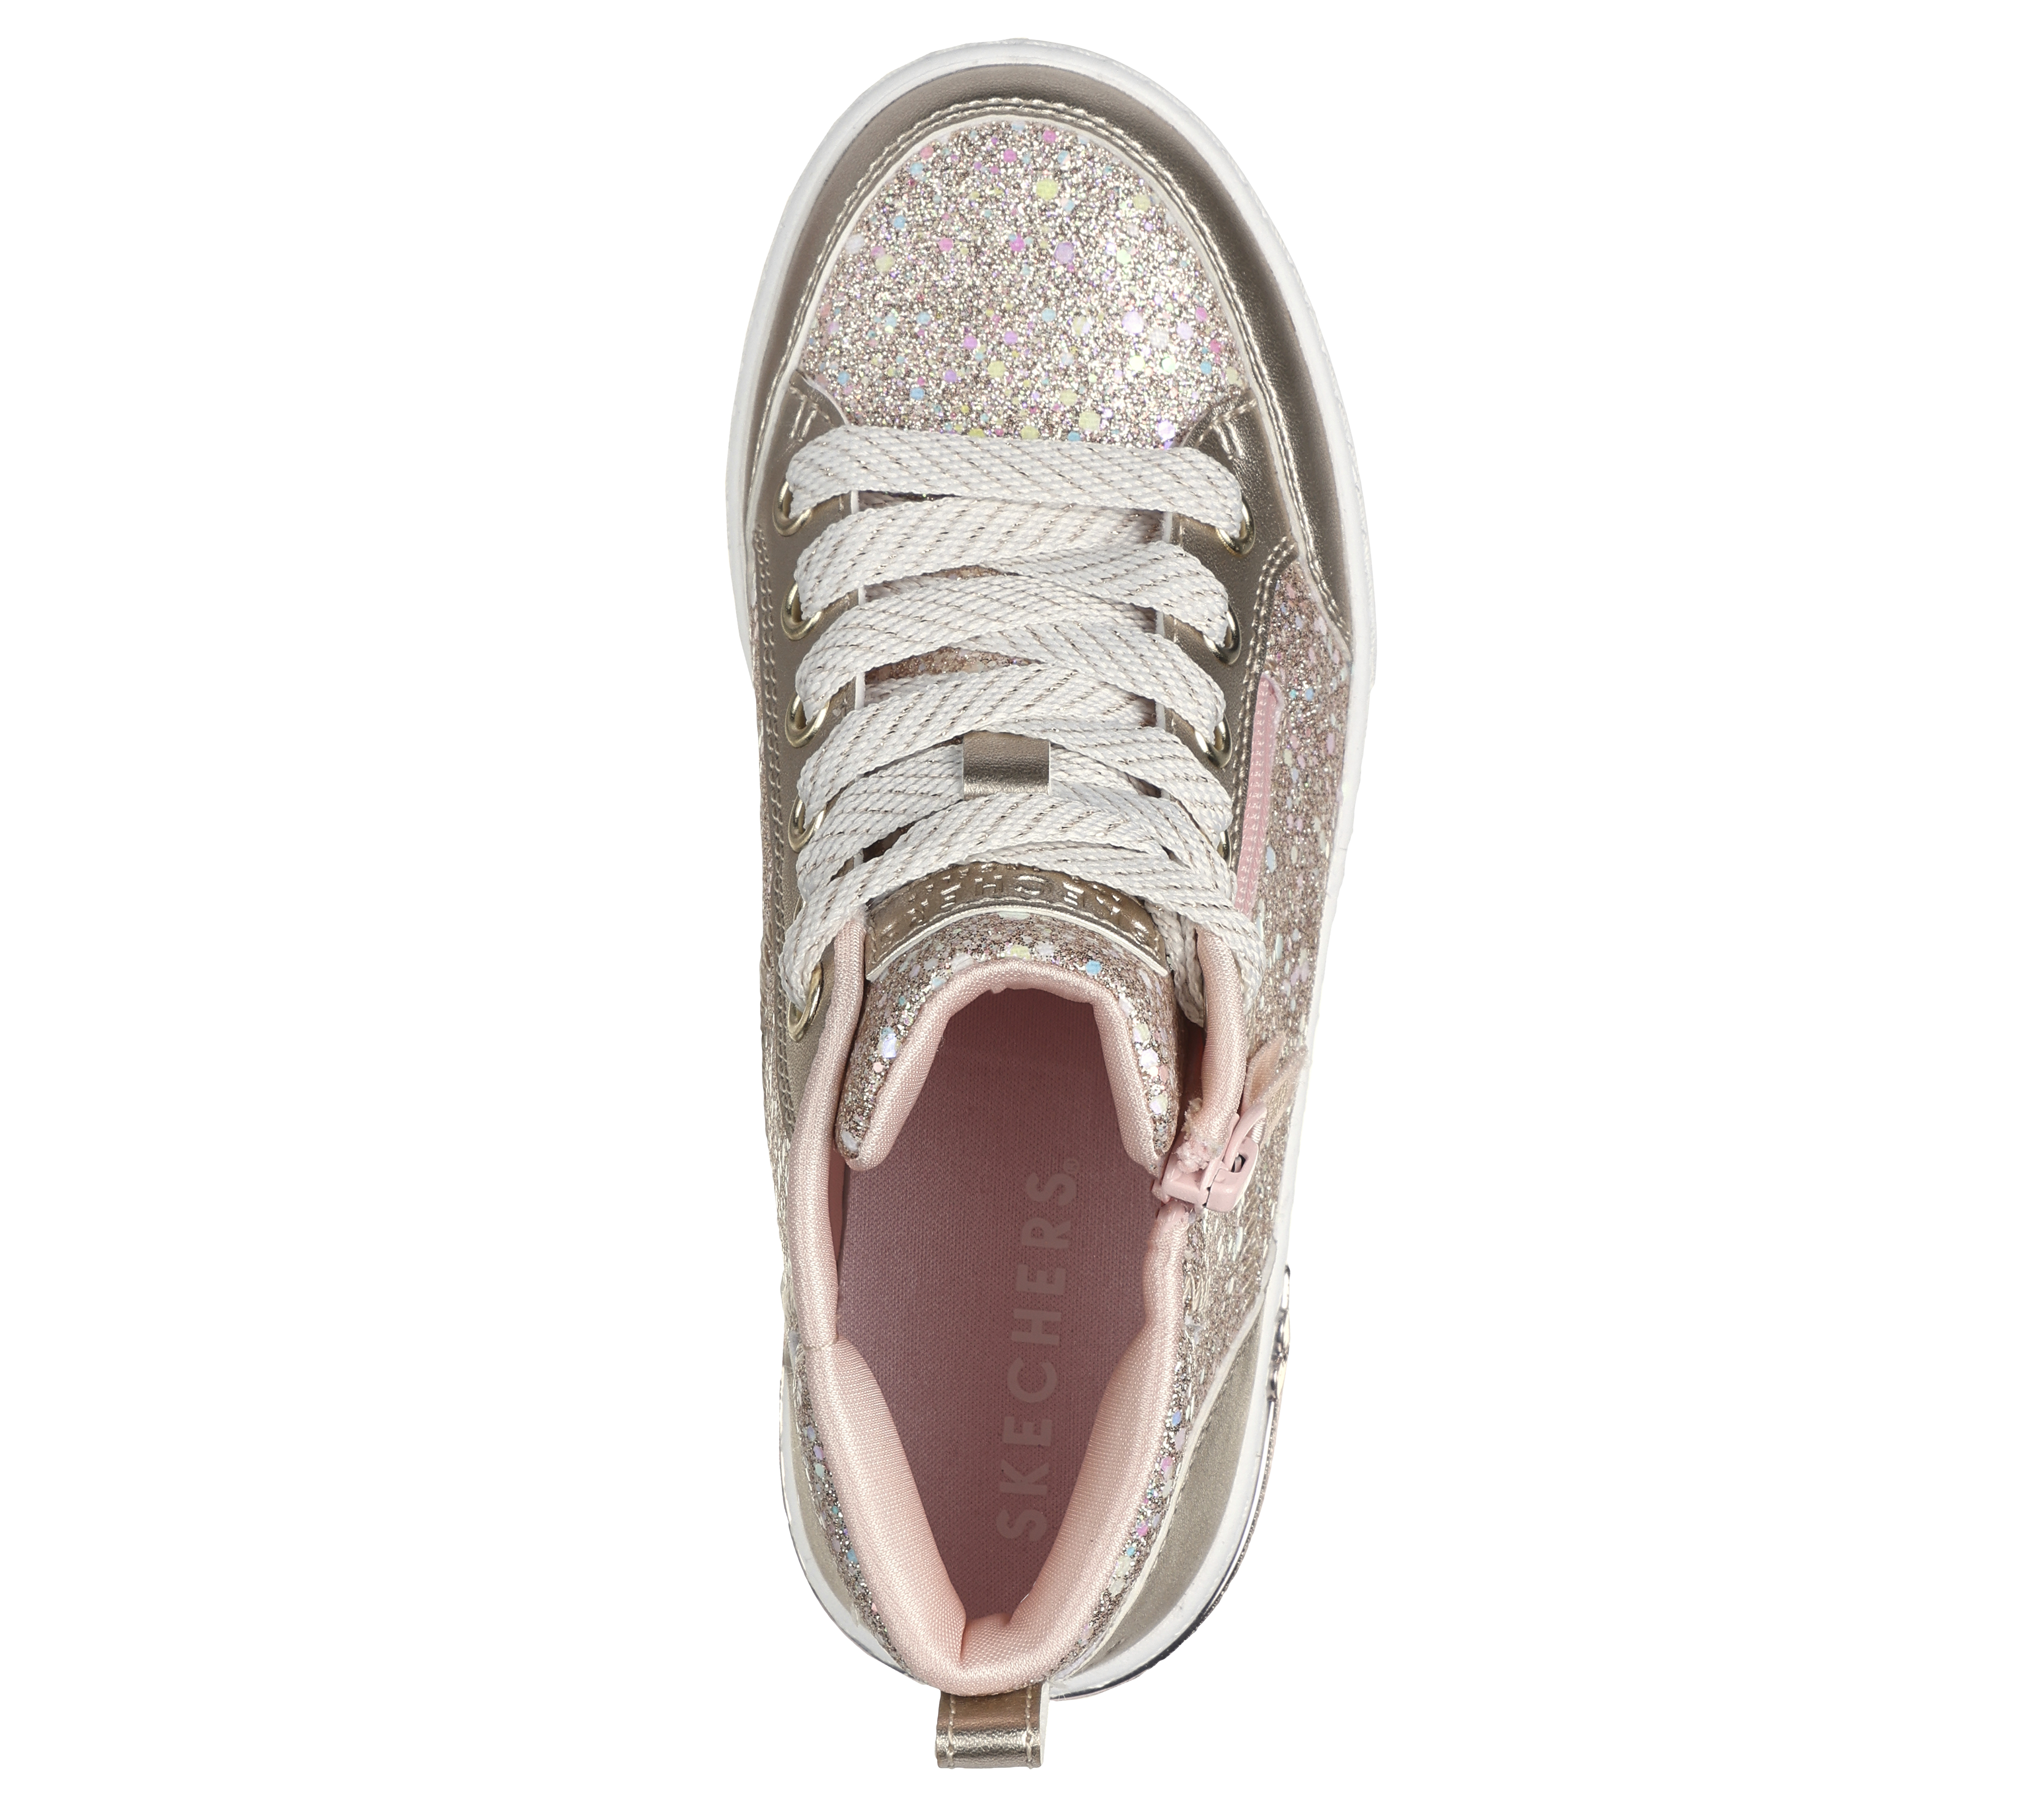  Skechers Kids Girls Street Shoutouts-Glitter Glams Sneaker,  Rose Gold, 11.5 Little Kid